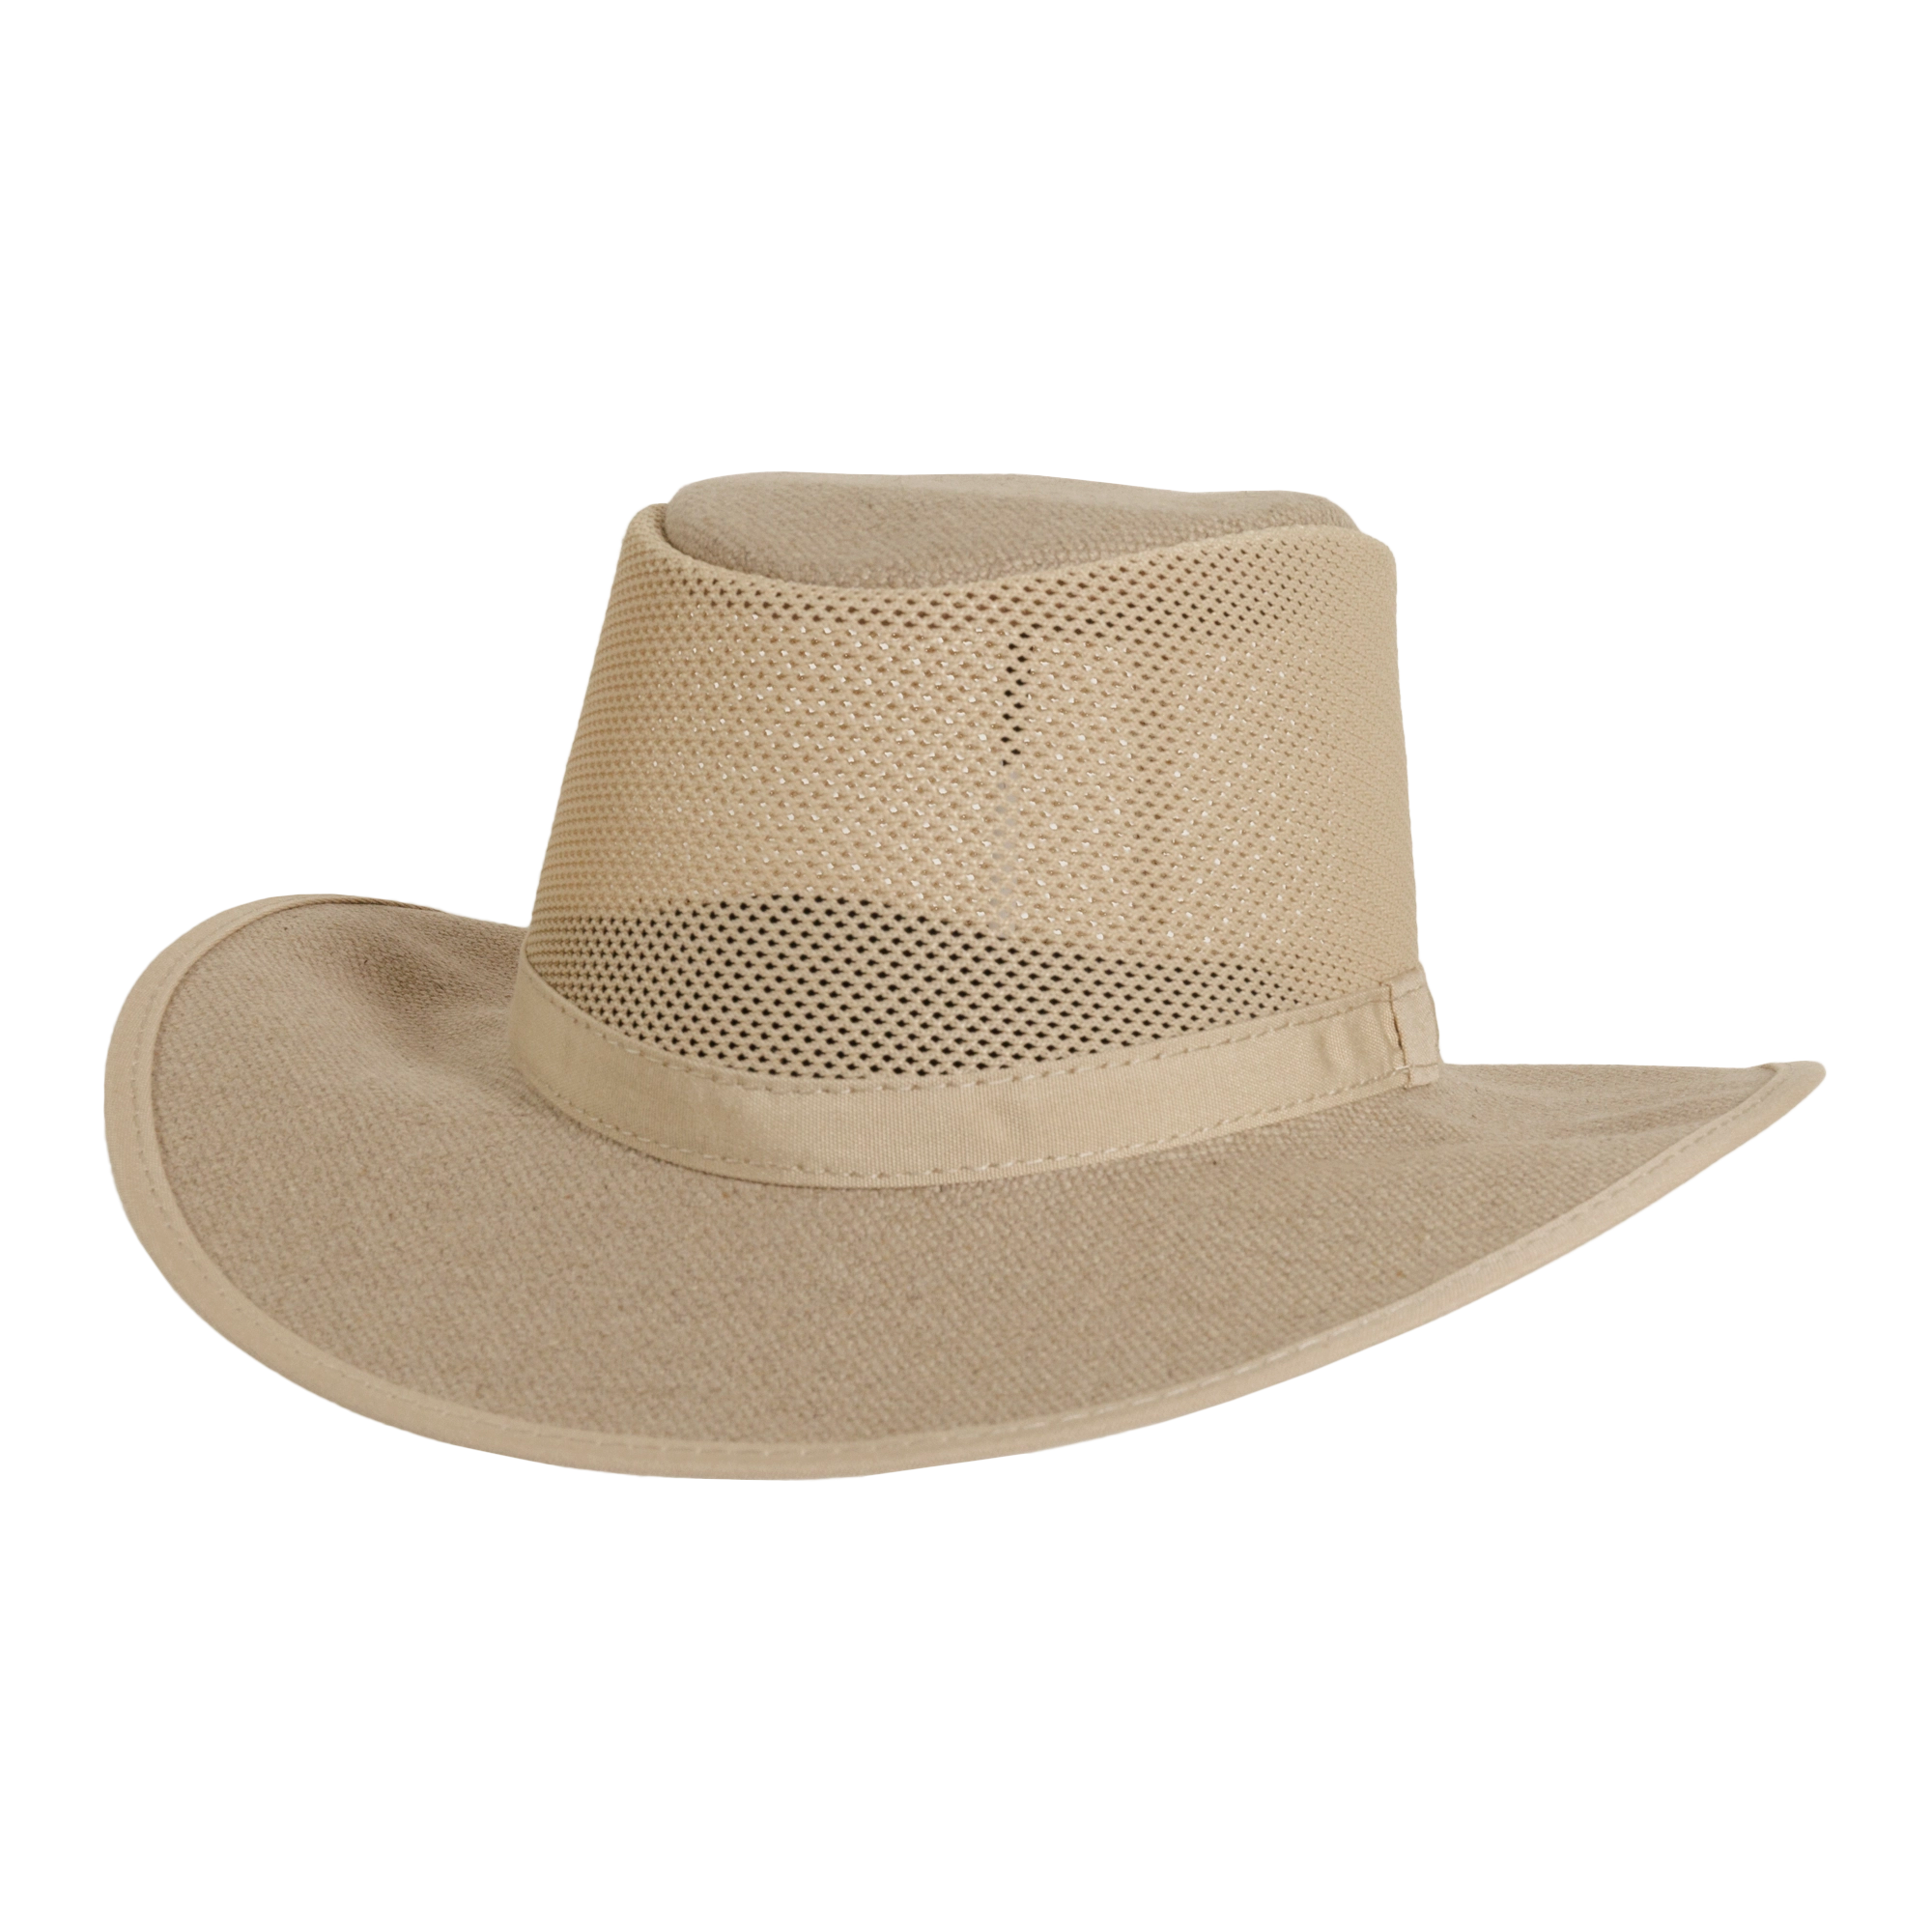 Willie Hemp Khaki Mesh Sun Hat by American Hat Makers